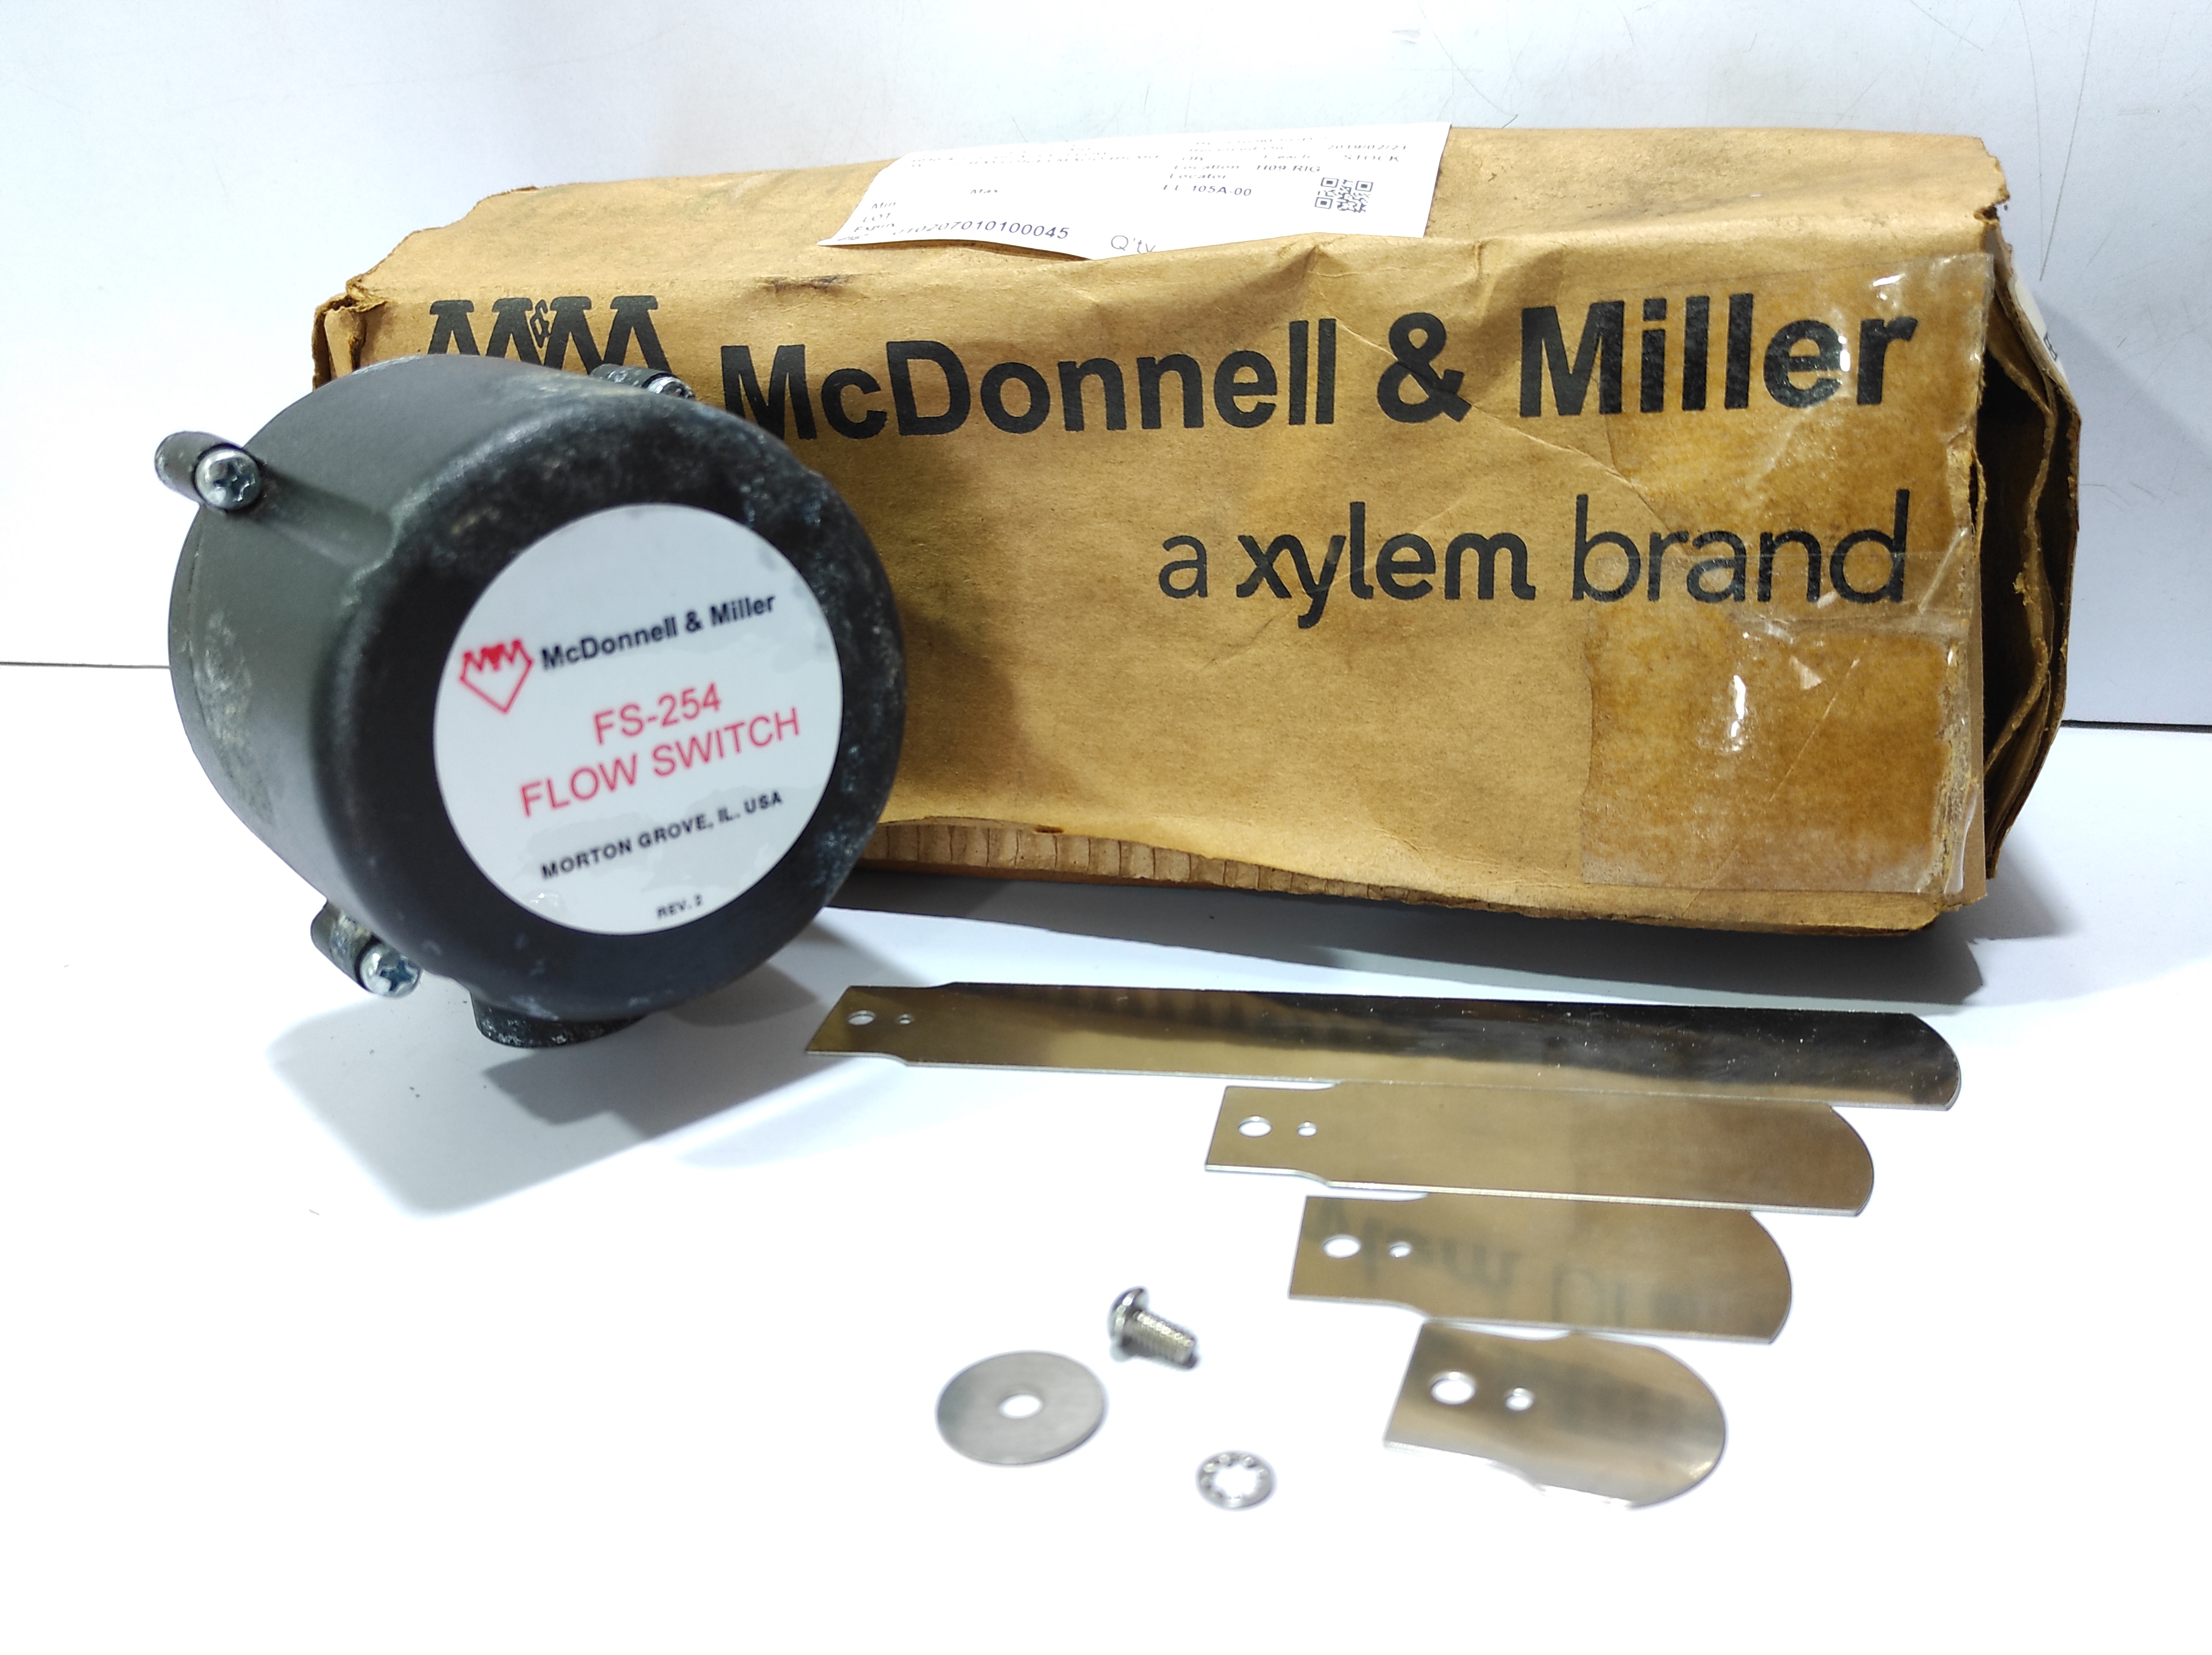 McDONNELL & MILLER FS-254 FLOW SWITCH